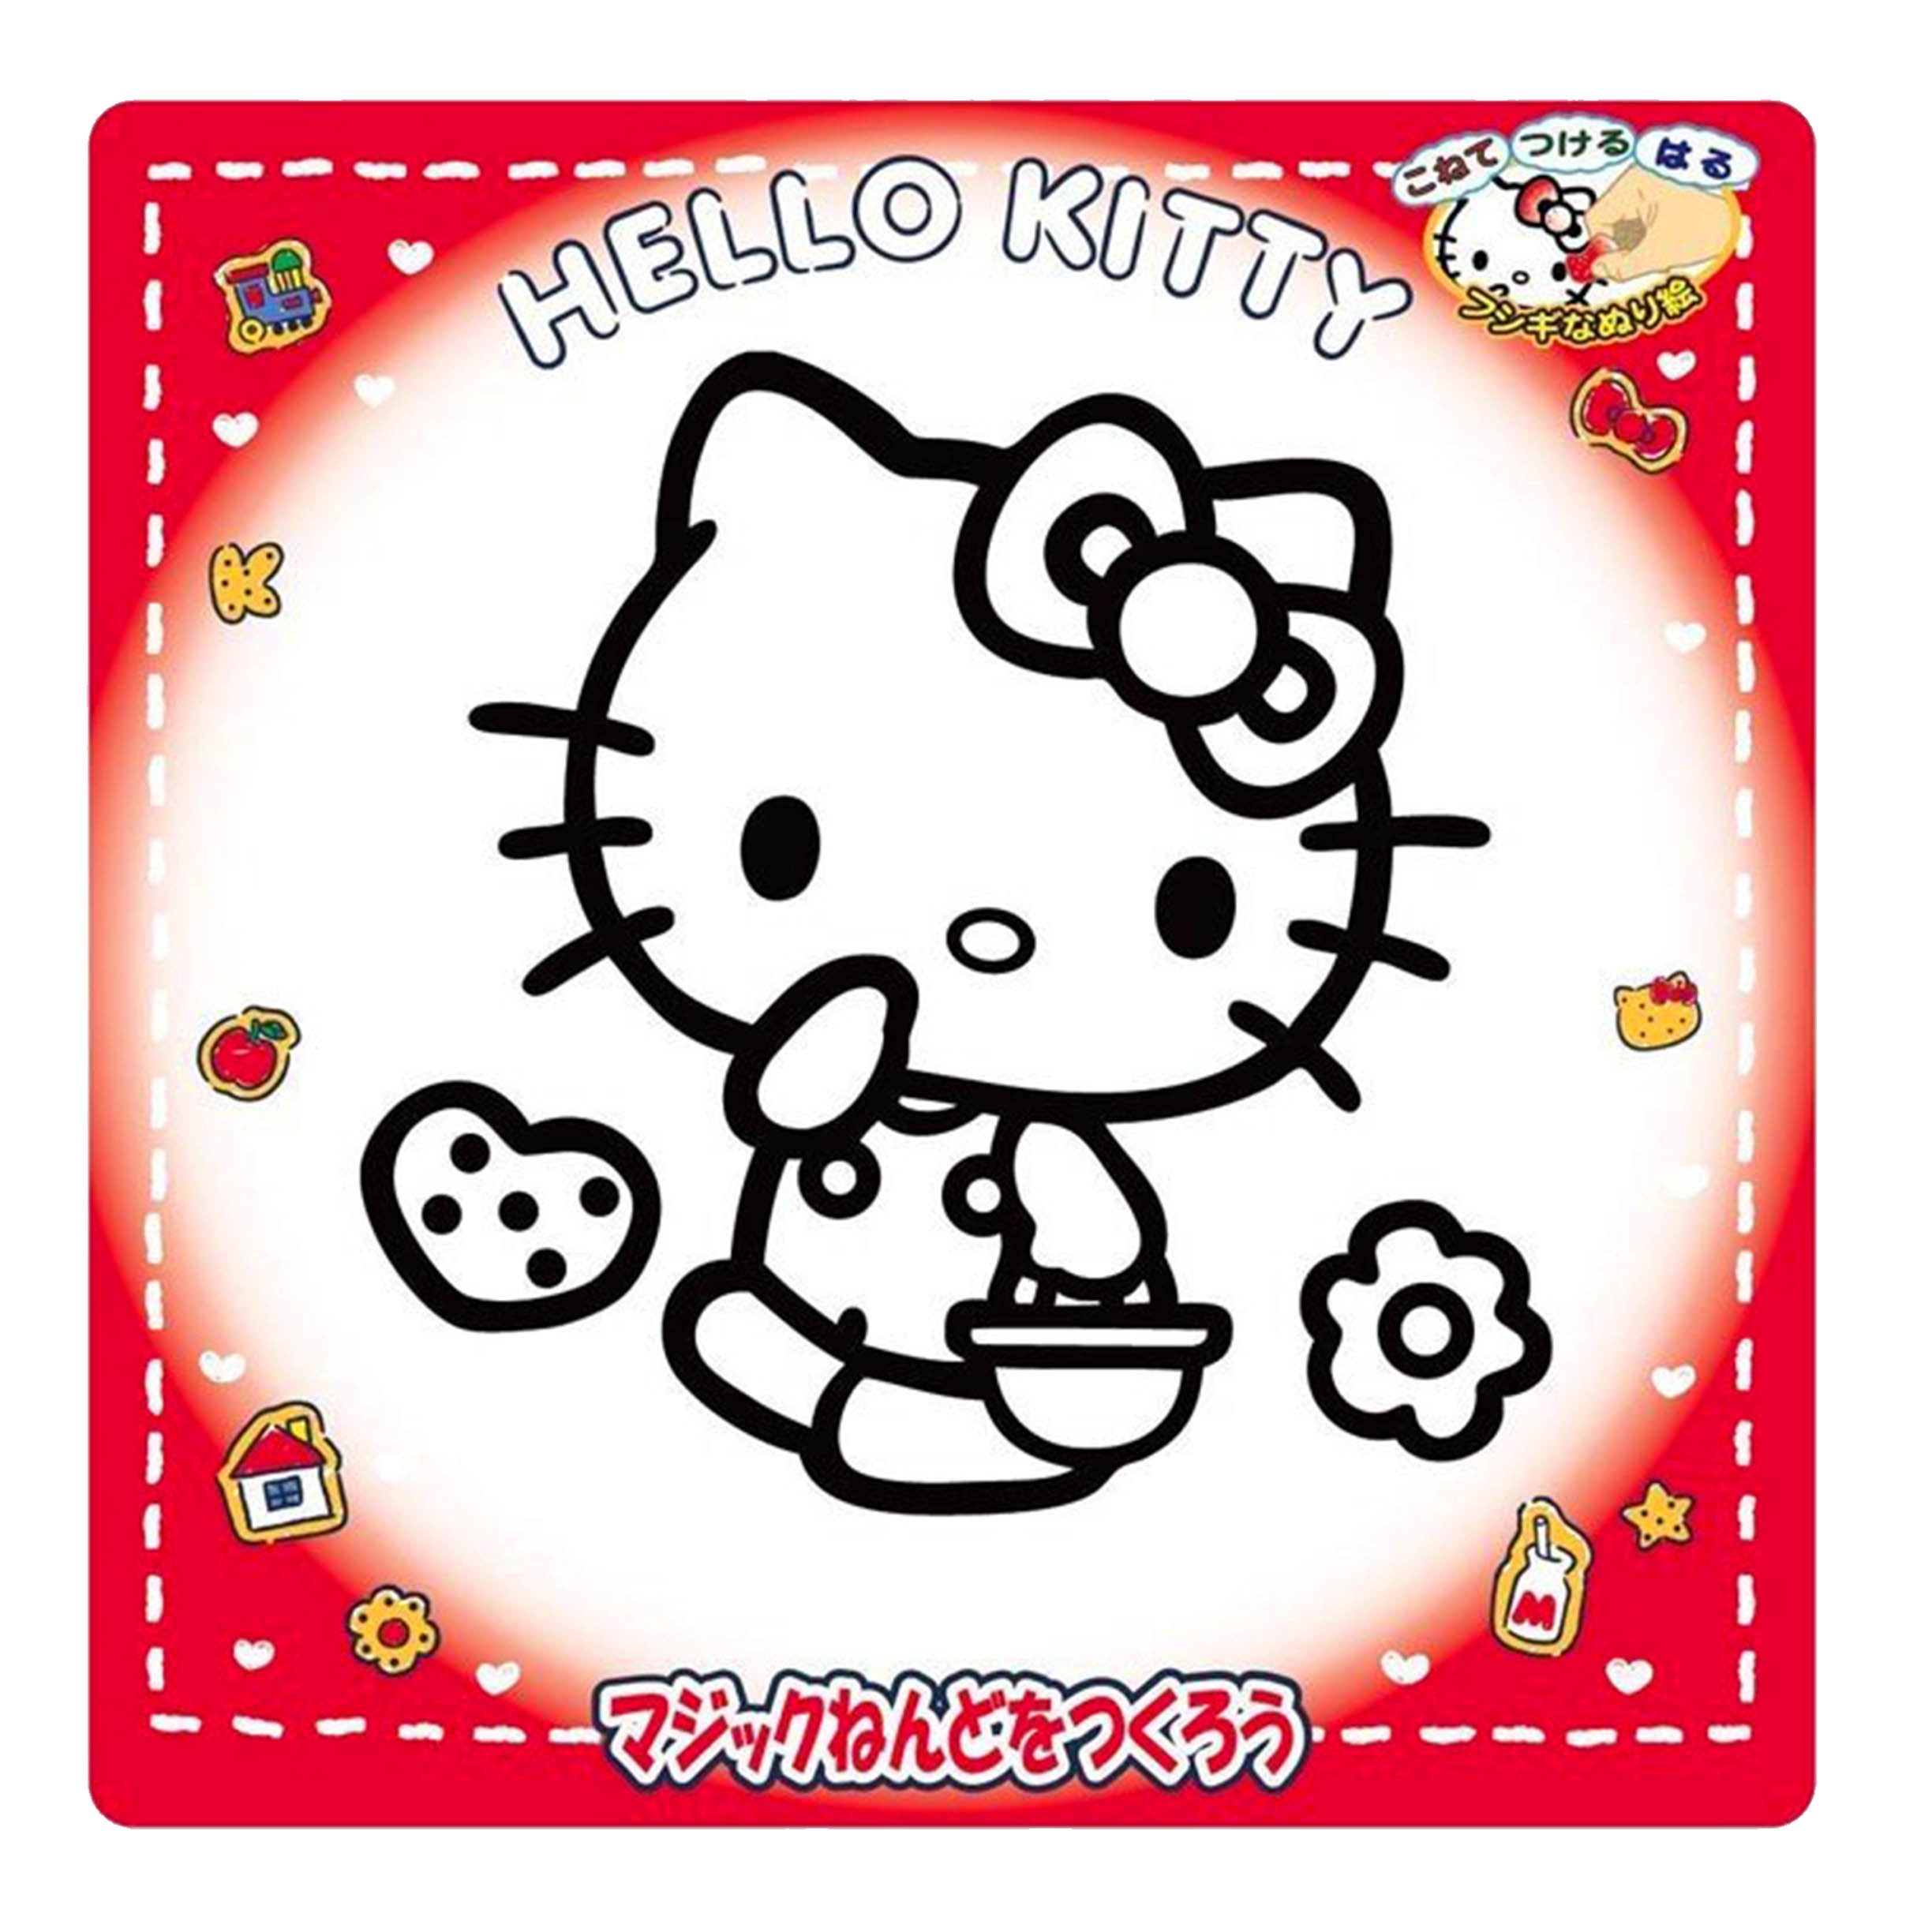 DIY彩繪玻璃貼 凱蒂貓 HELLO KITTY 三麗鷗 Sanrio 裝飾貼紙 日本進口正版授權